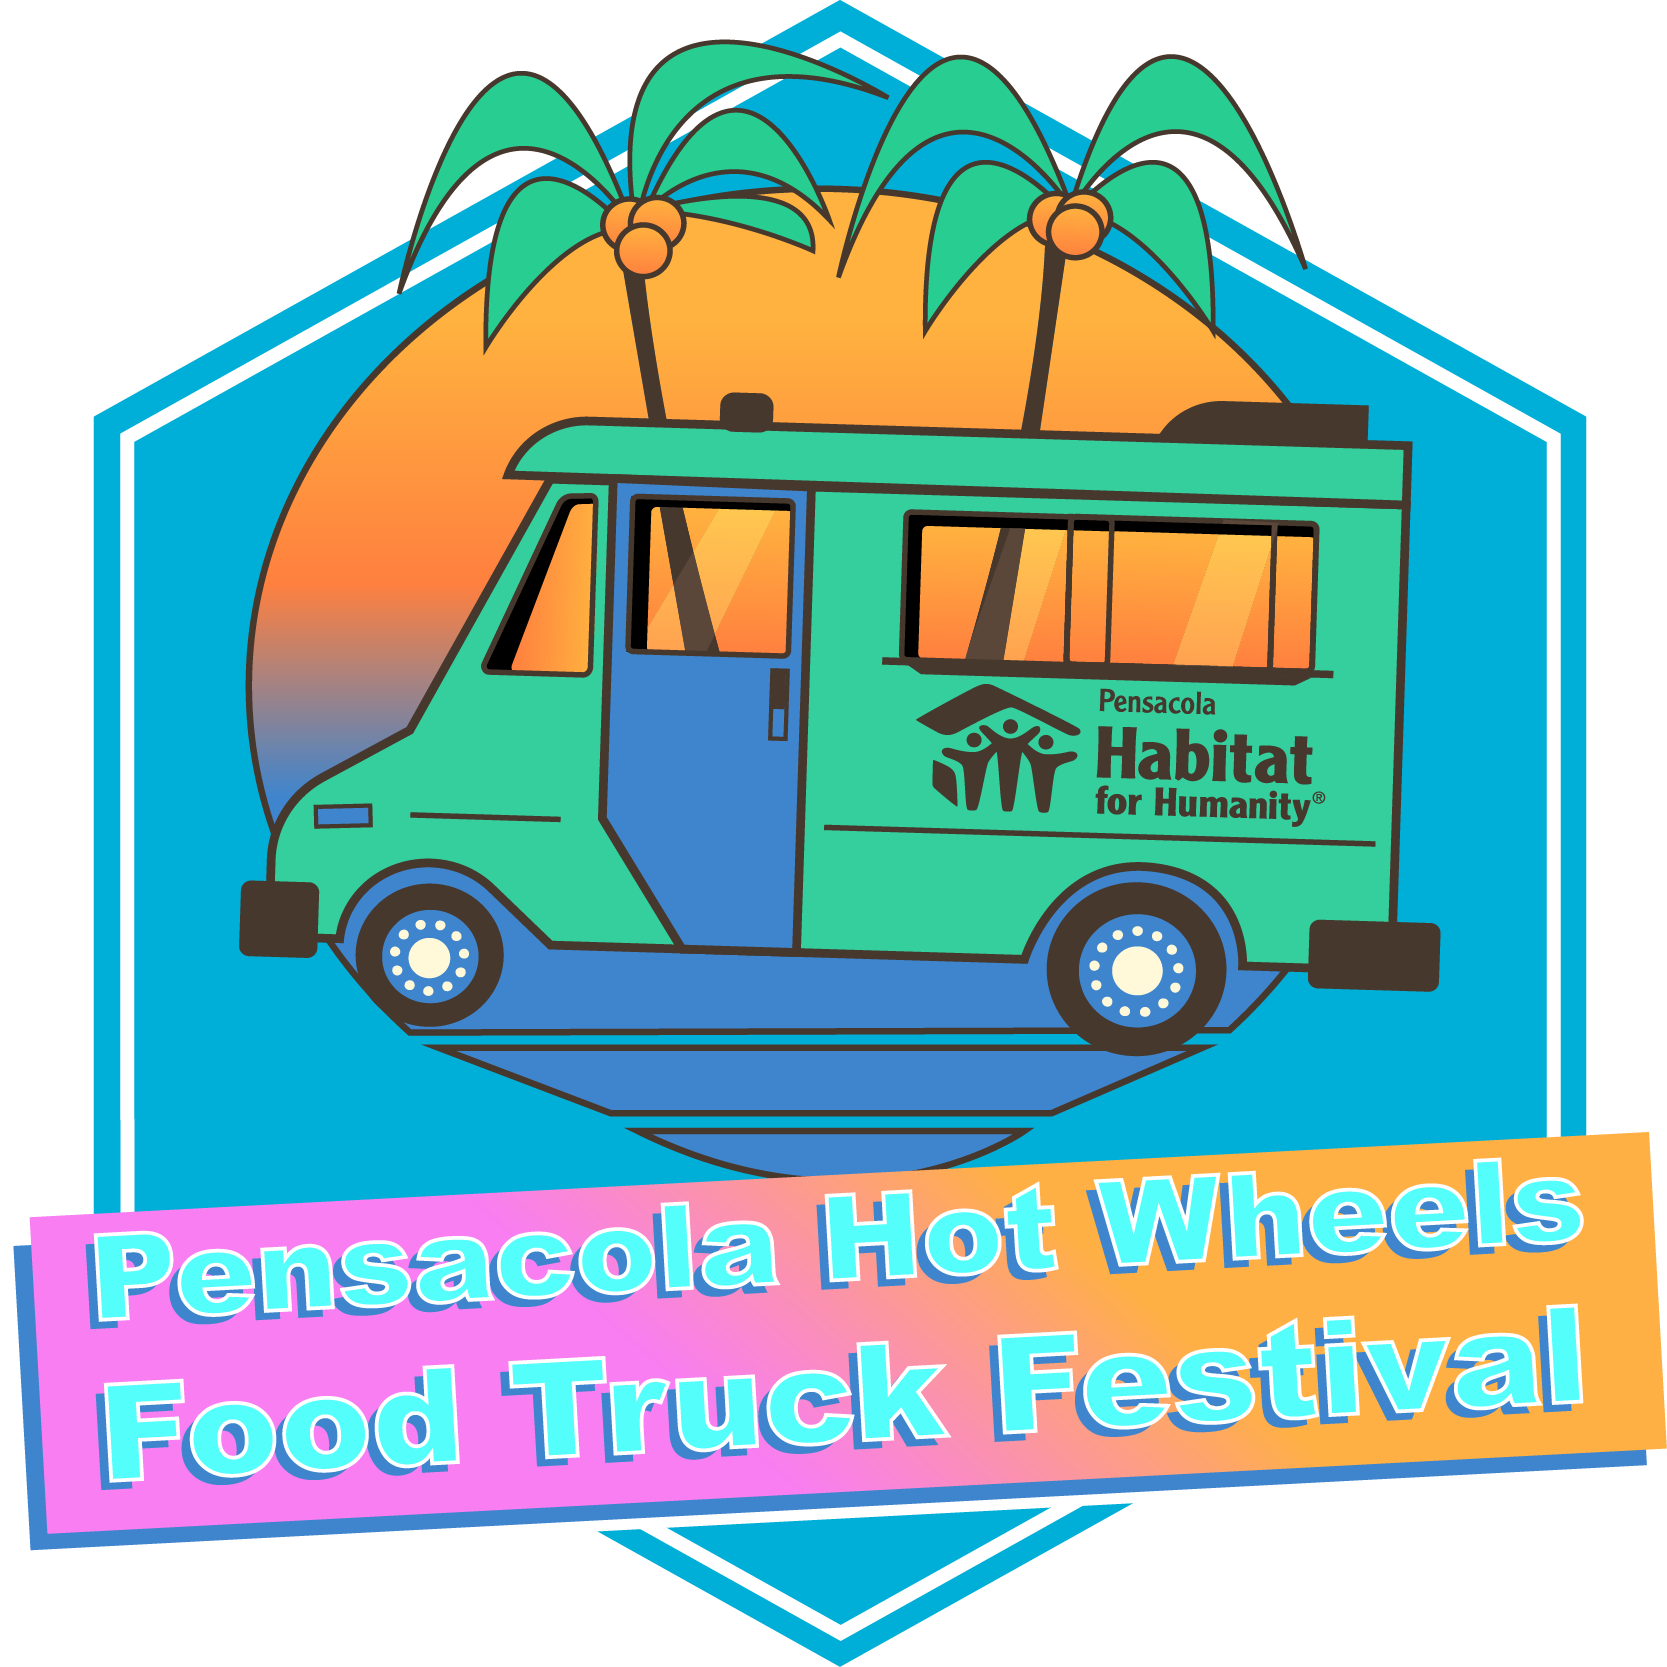 Hot Wheels Food Truck Festival - Pensacola Hot Wheels Food Truck Festival (1667x1667)